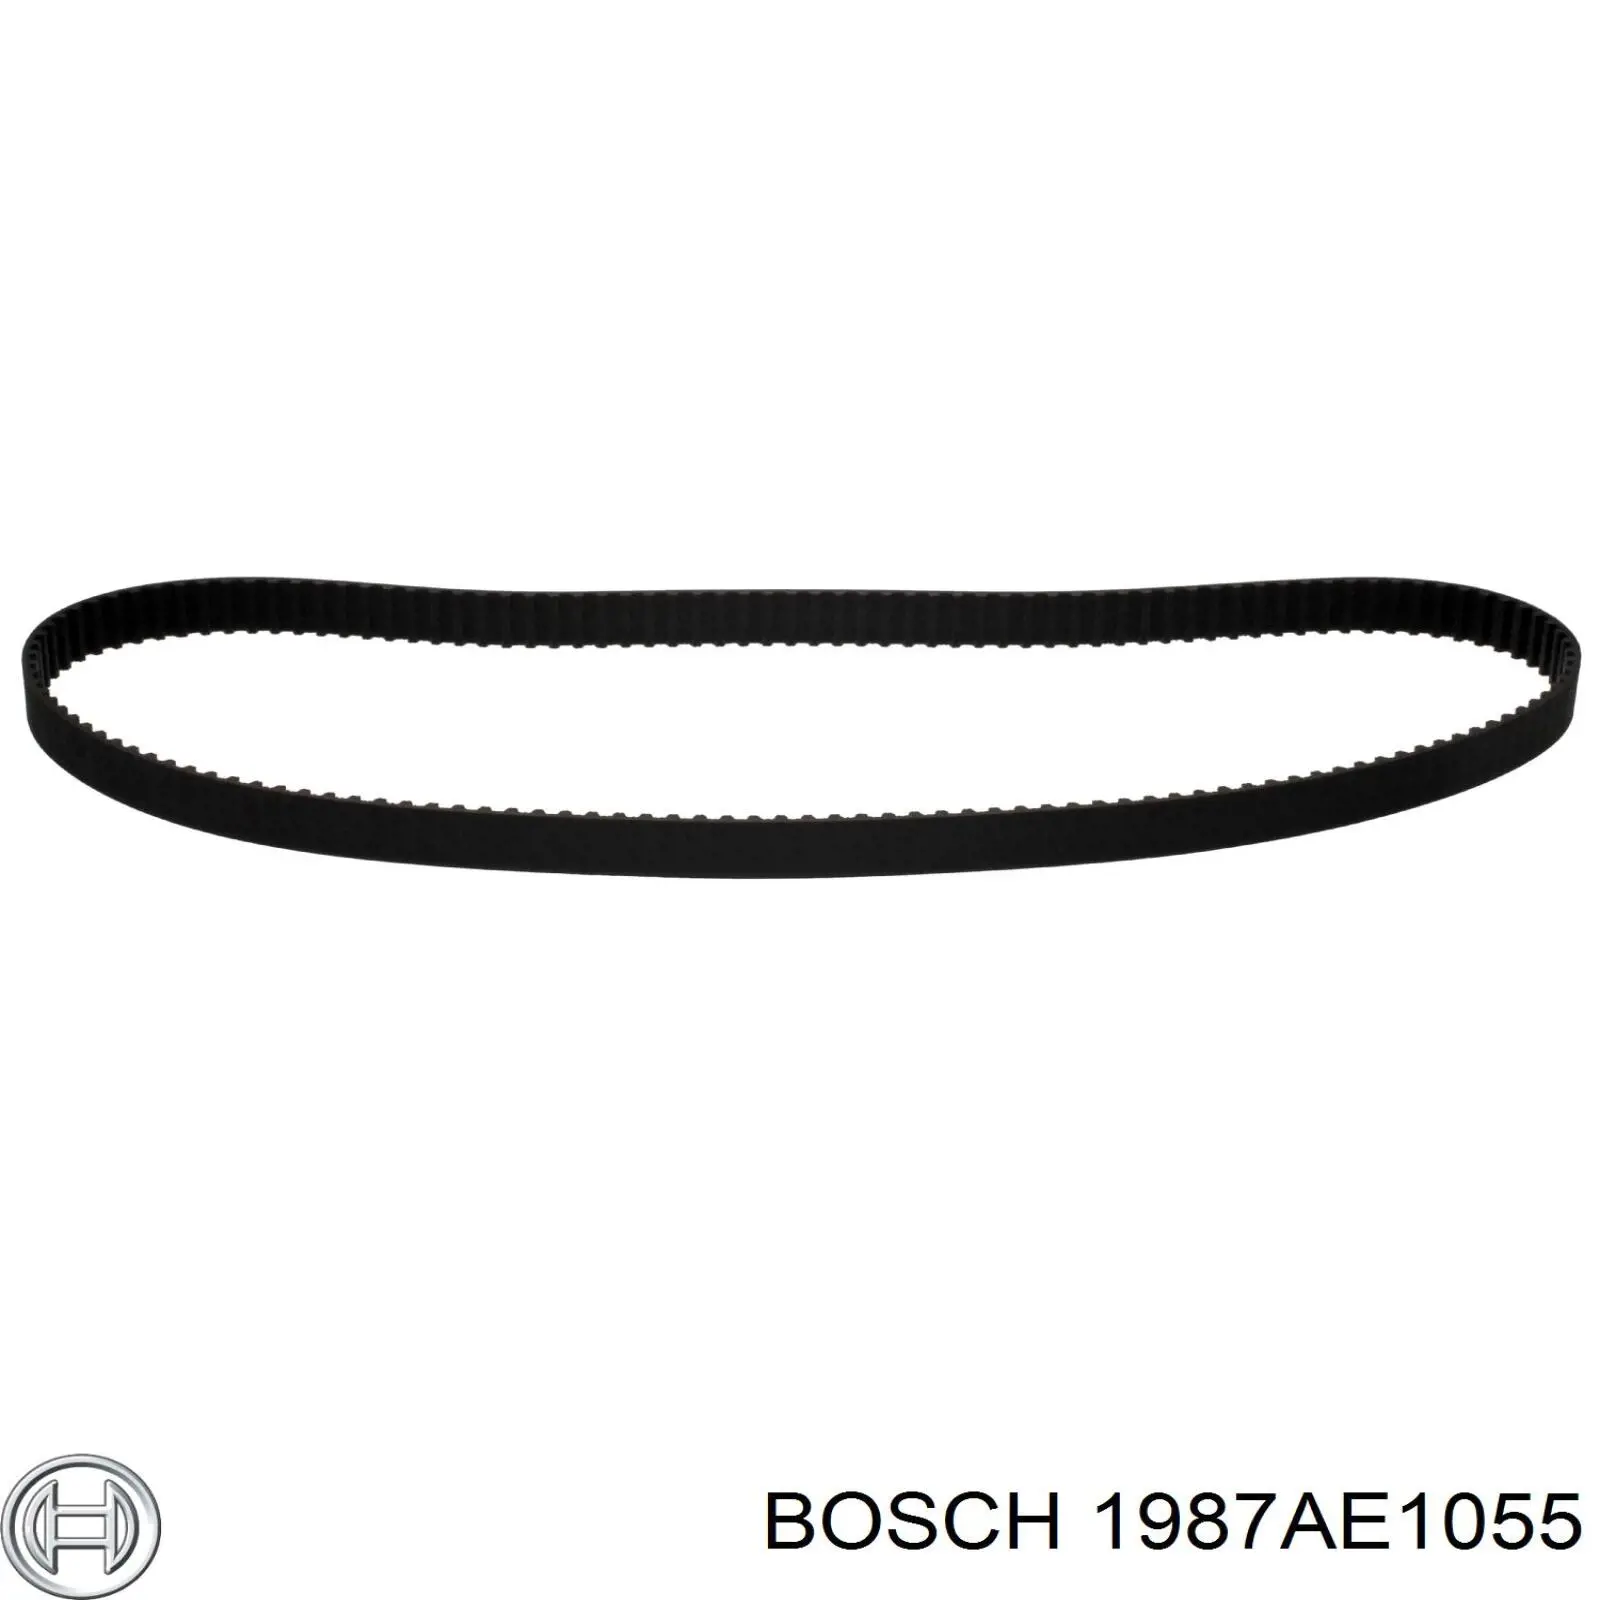 1987AE1055 Bosch correa distribucion